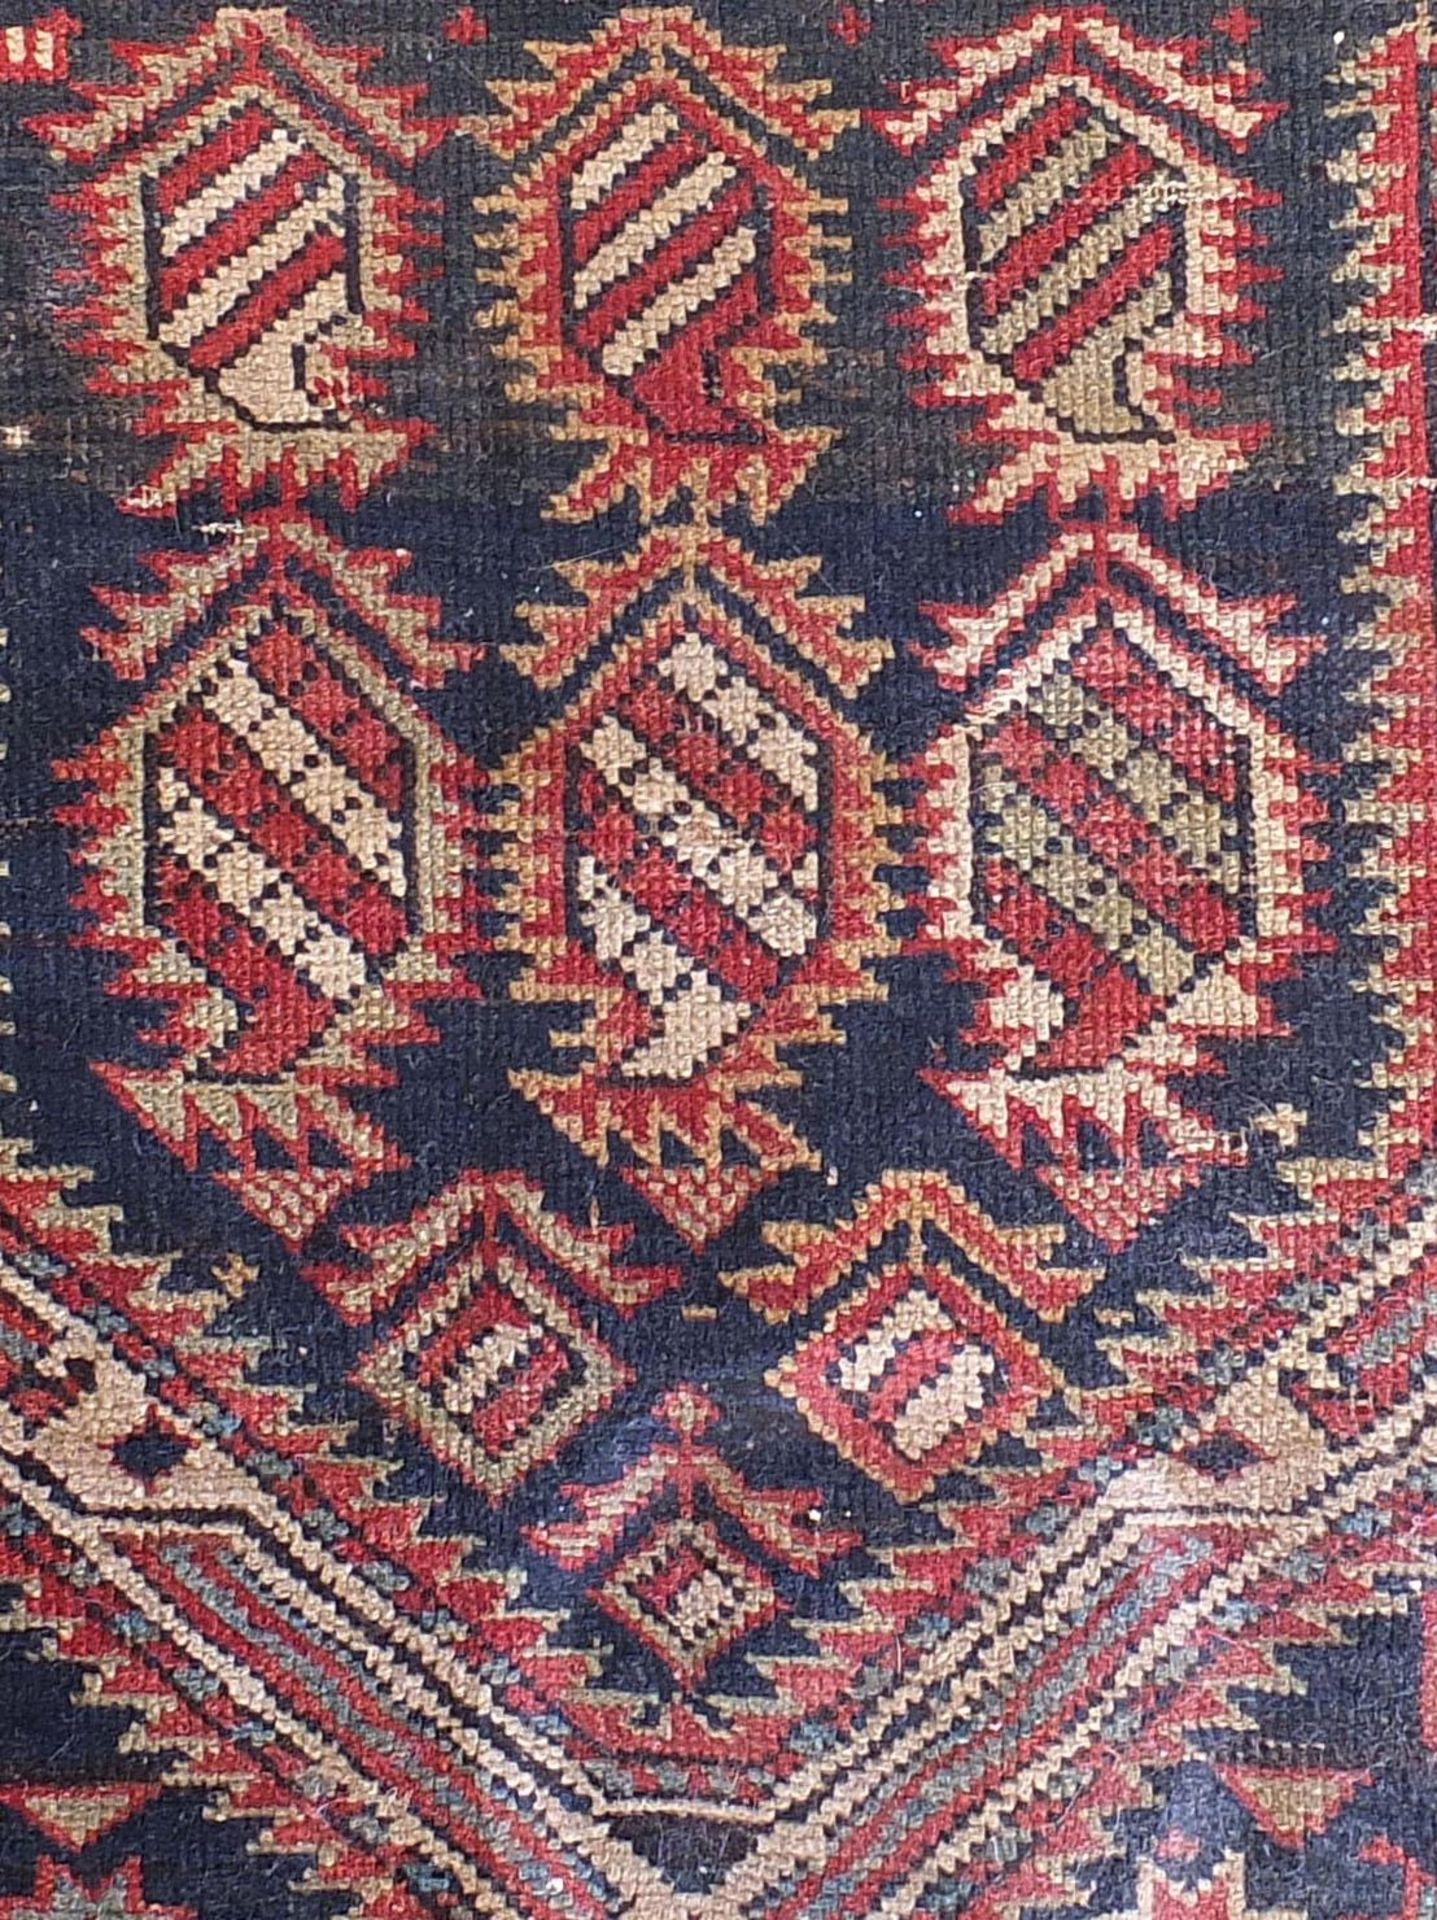 Middle Eastern prayer rug decorated with floral motifs, 142cm x 118cm - Bild 3 aus 4